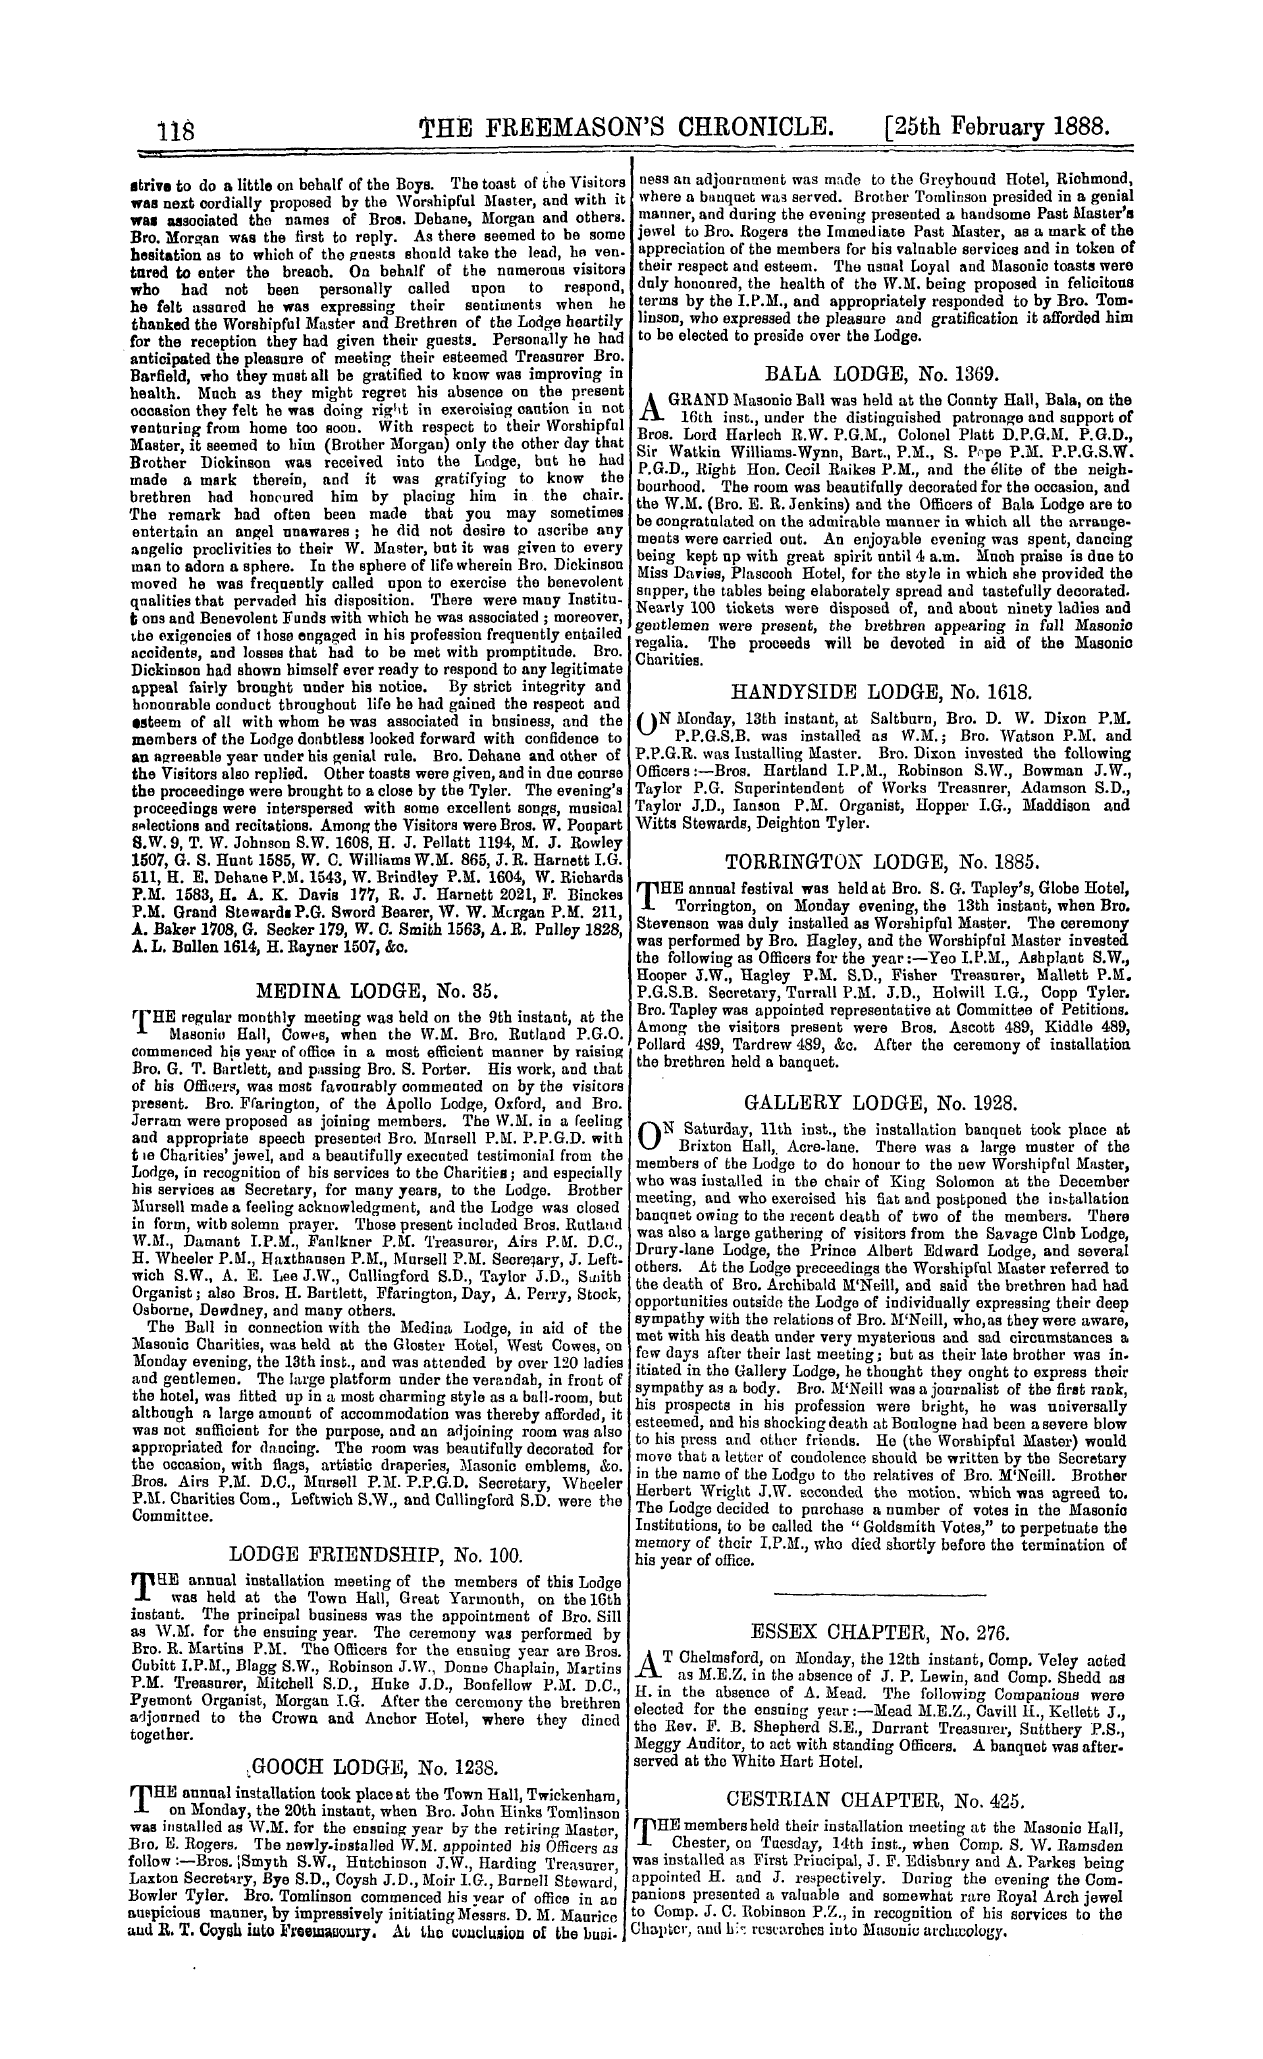 The Freemason's Chronicle: 1888-02-25 - Installation Meetings, &C.